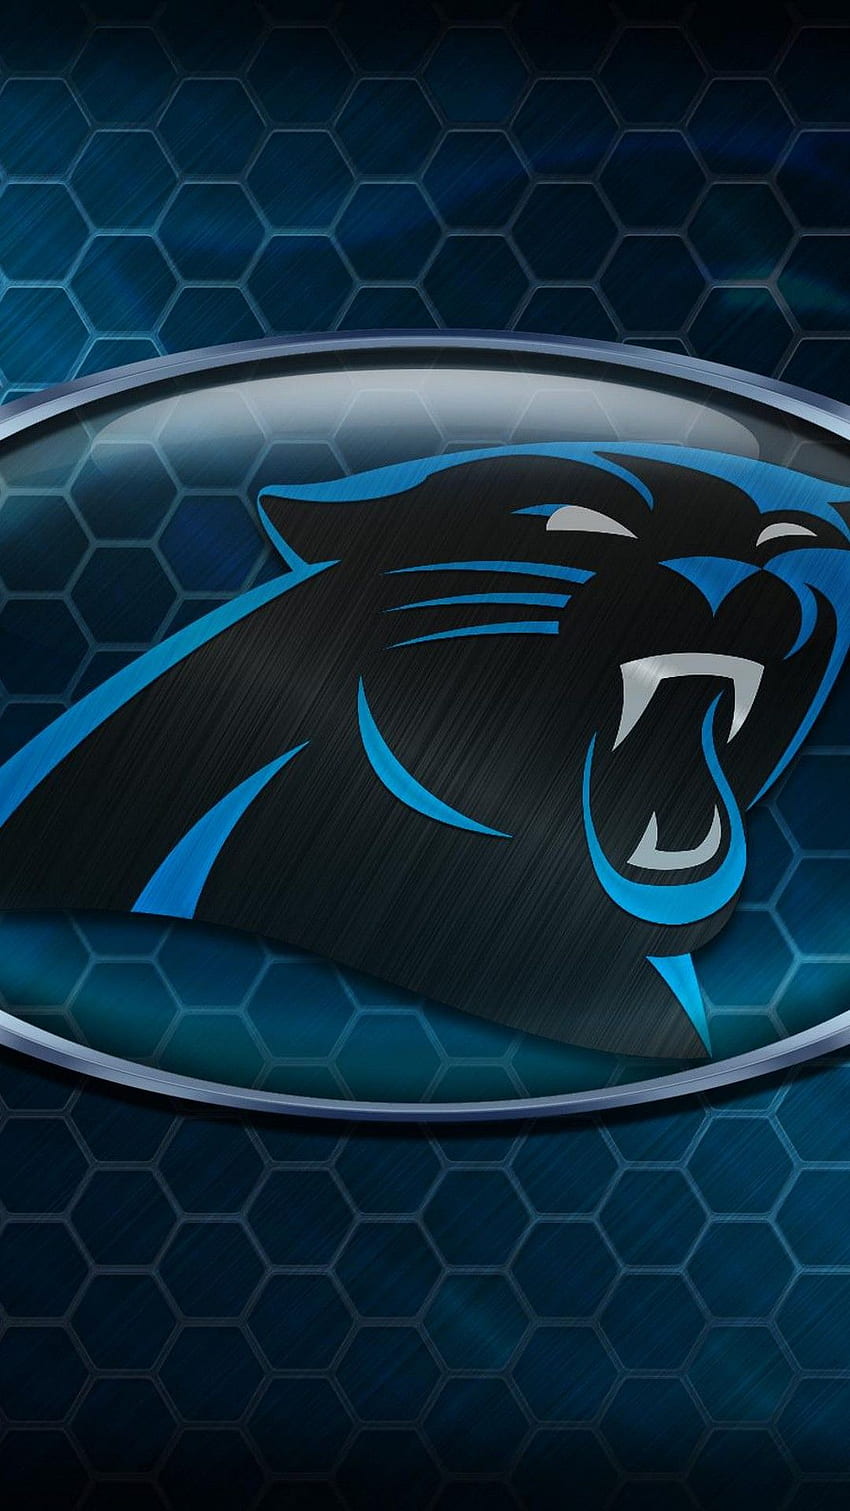 Carolina Panthers iPhone Lock Screen - 2020 NFL iPhone HD phone wallpaper